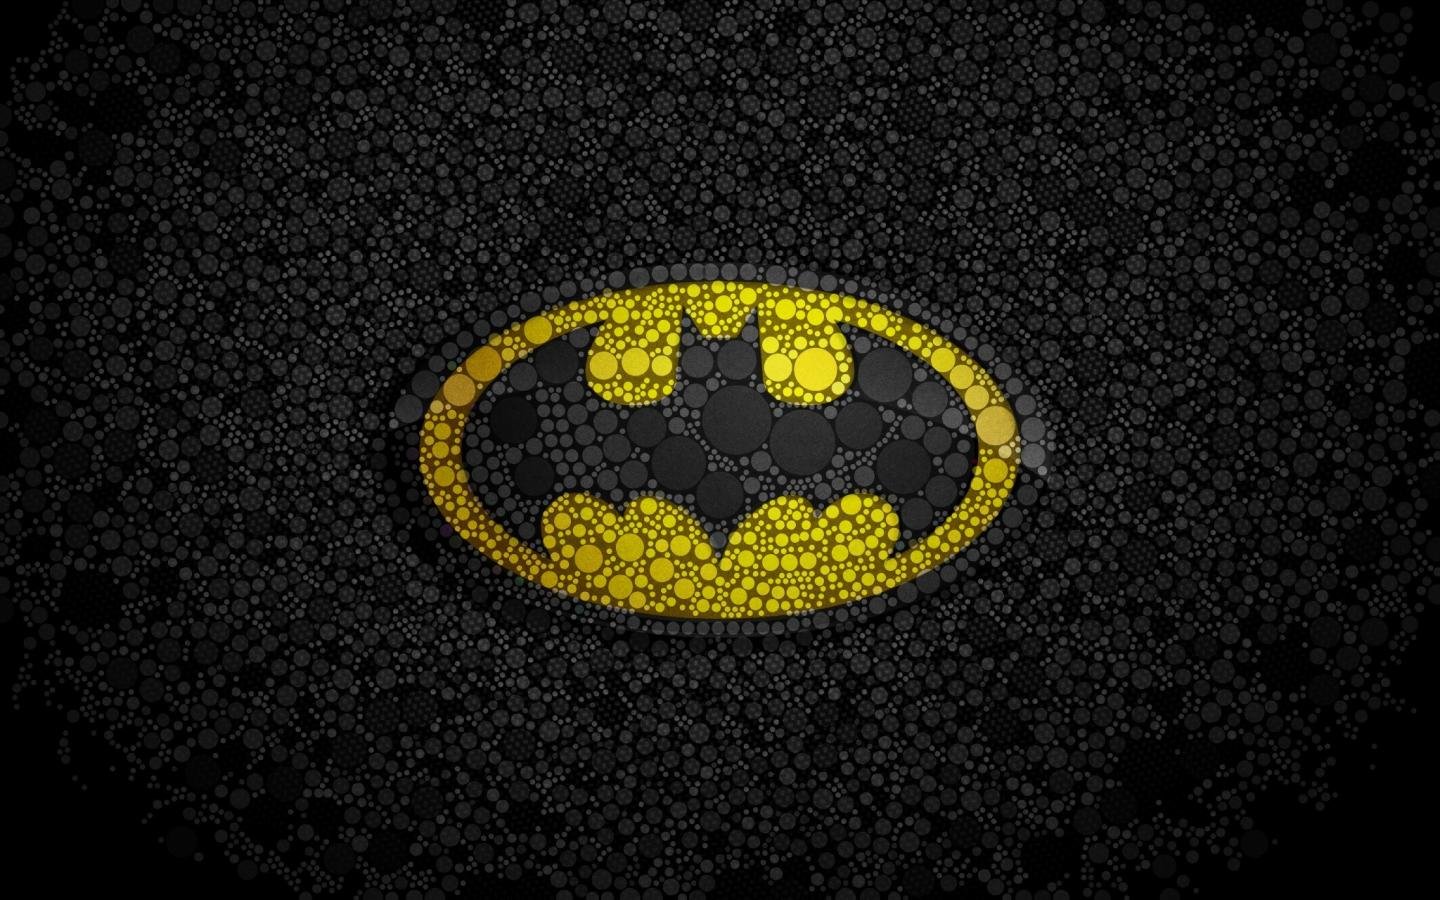 Best Batman Logo (Symbol) wallpaper ID:42164 for High Resolution hd 1440x900 computer